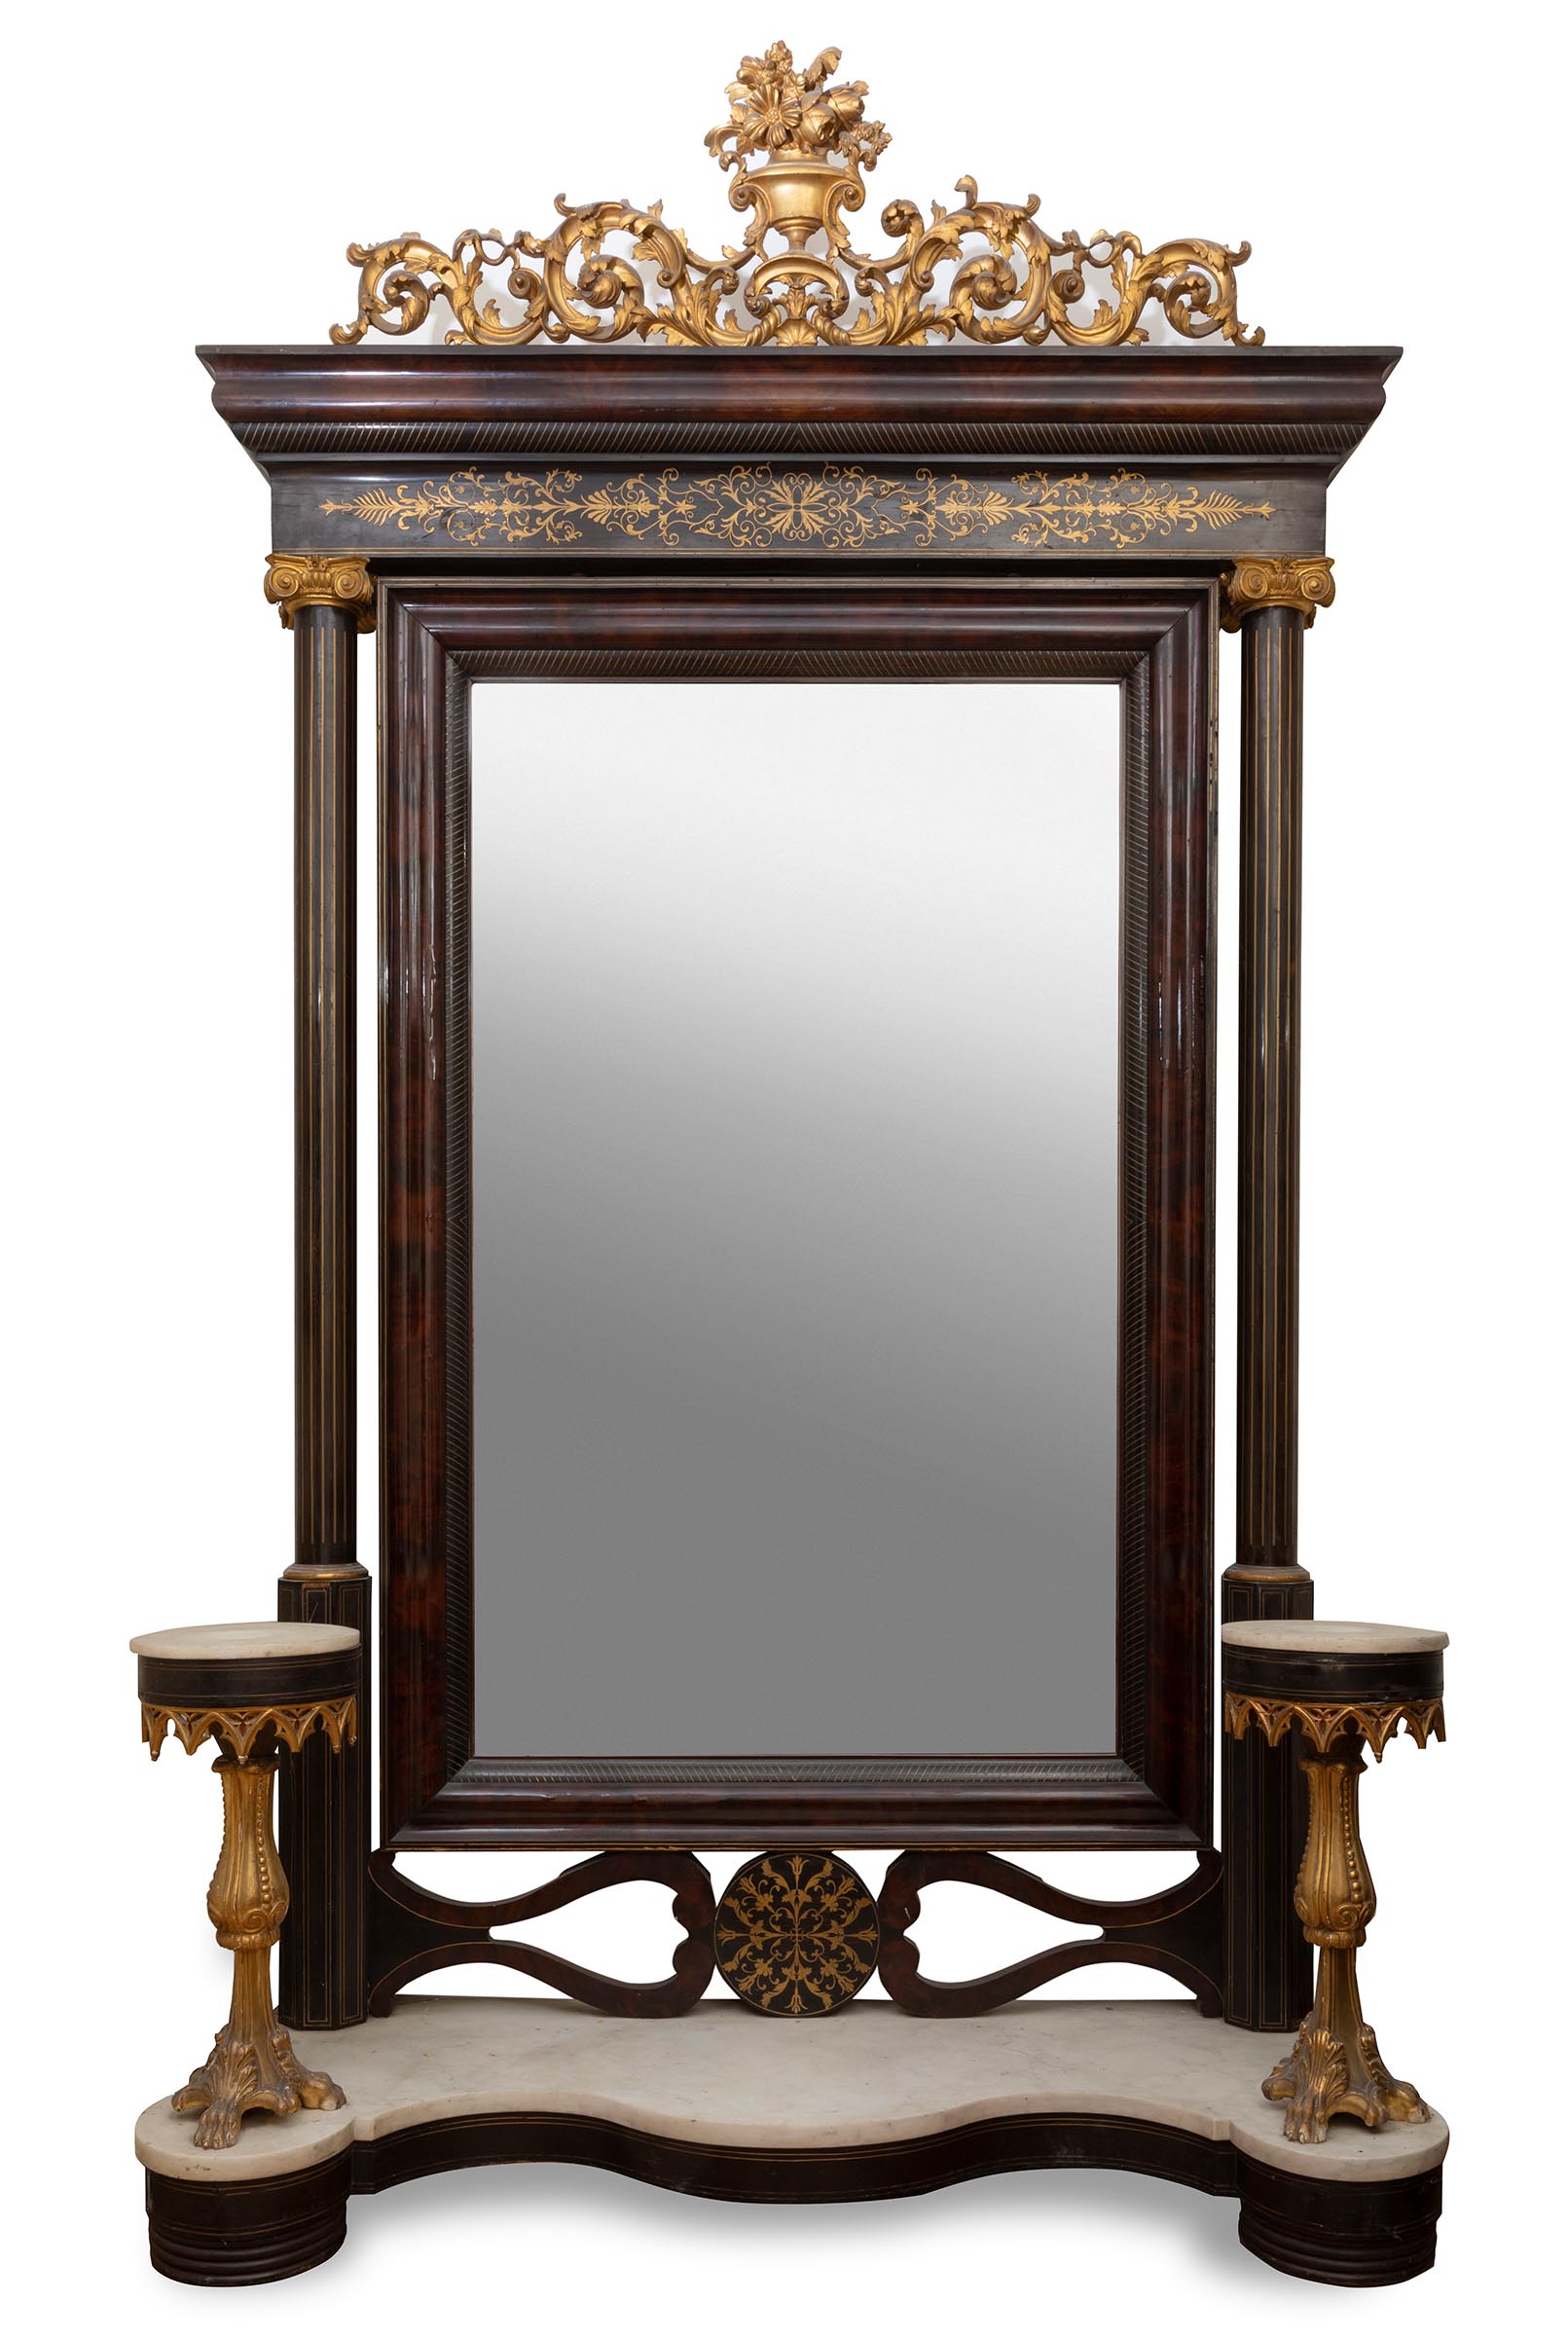 Elizabethan hall mirror, XIX century.Mahogany wood and marble.Measurements: 297 x 170 x 65 cm.Mirror